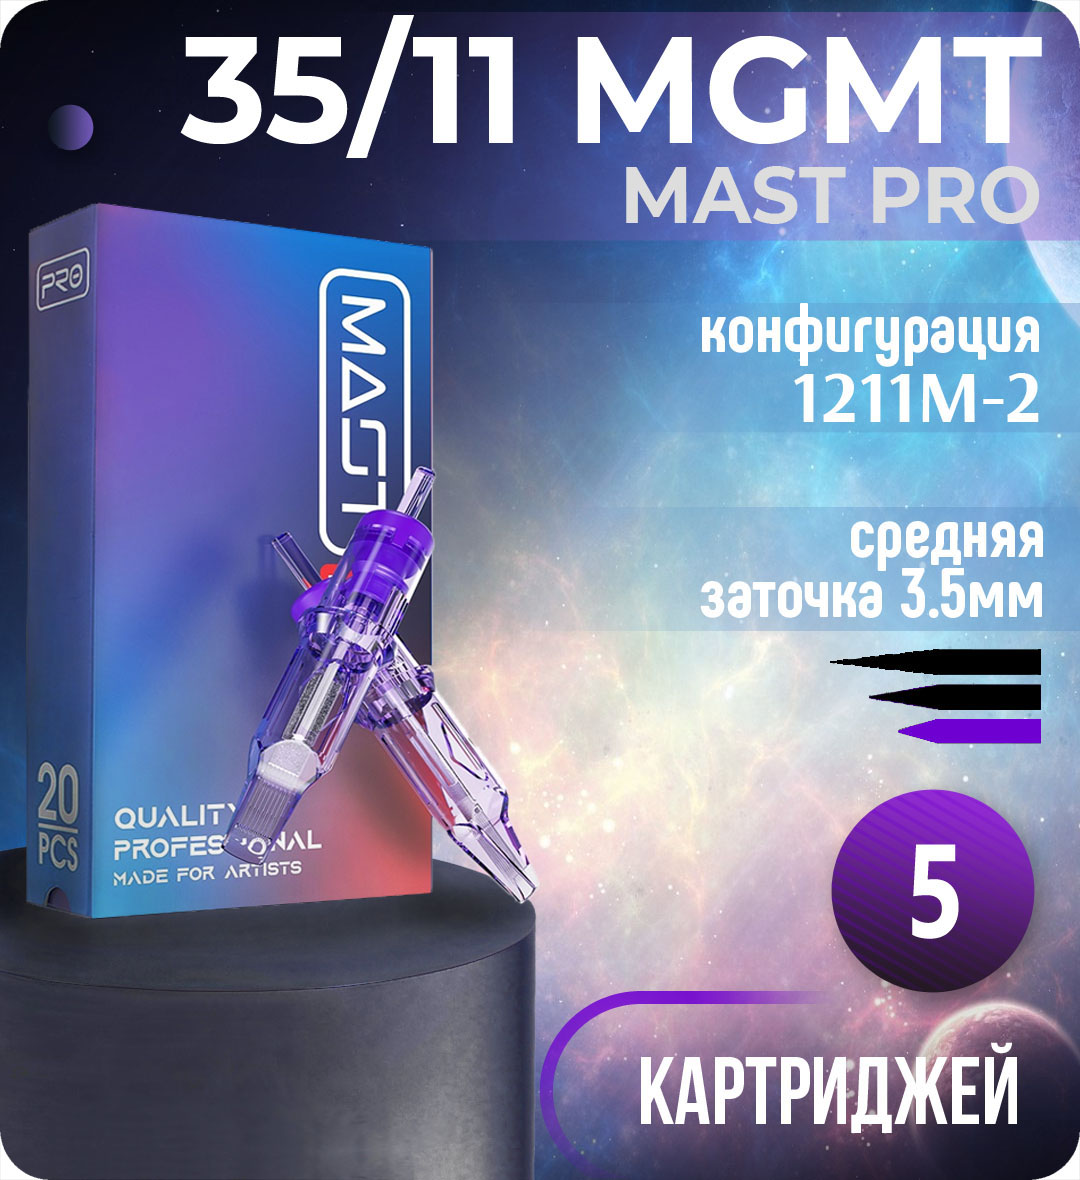 Картриджи Mast Pro 35/11 MGMT (1211M-2) для тату, перманентного макияжа и татуажа Dragonhawk 5шт